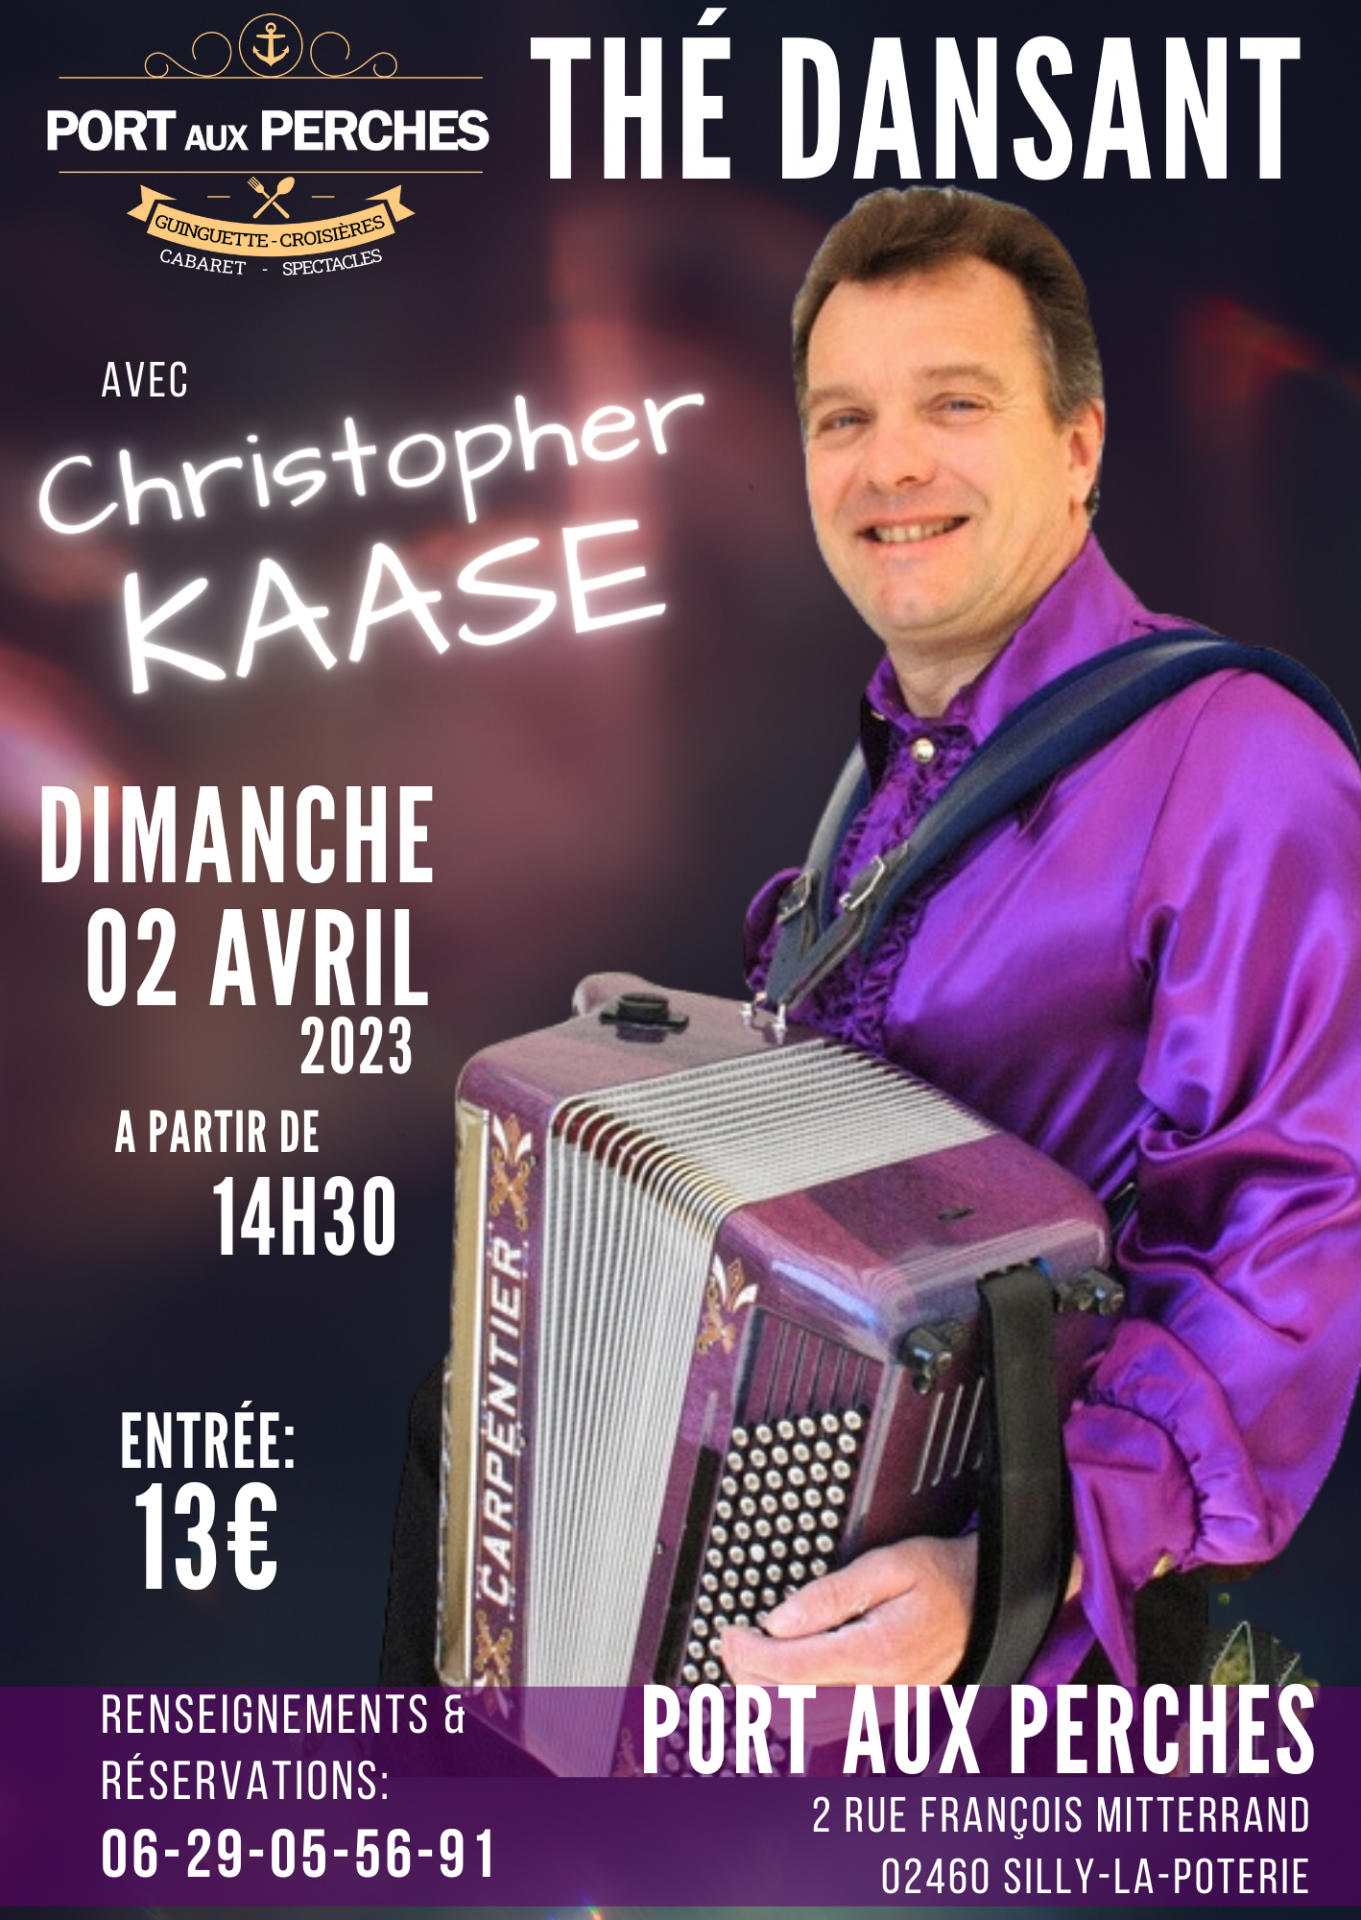 Christopher kaase the dansant port aux perches 02 avril 2023 1 